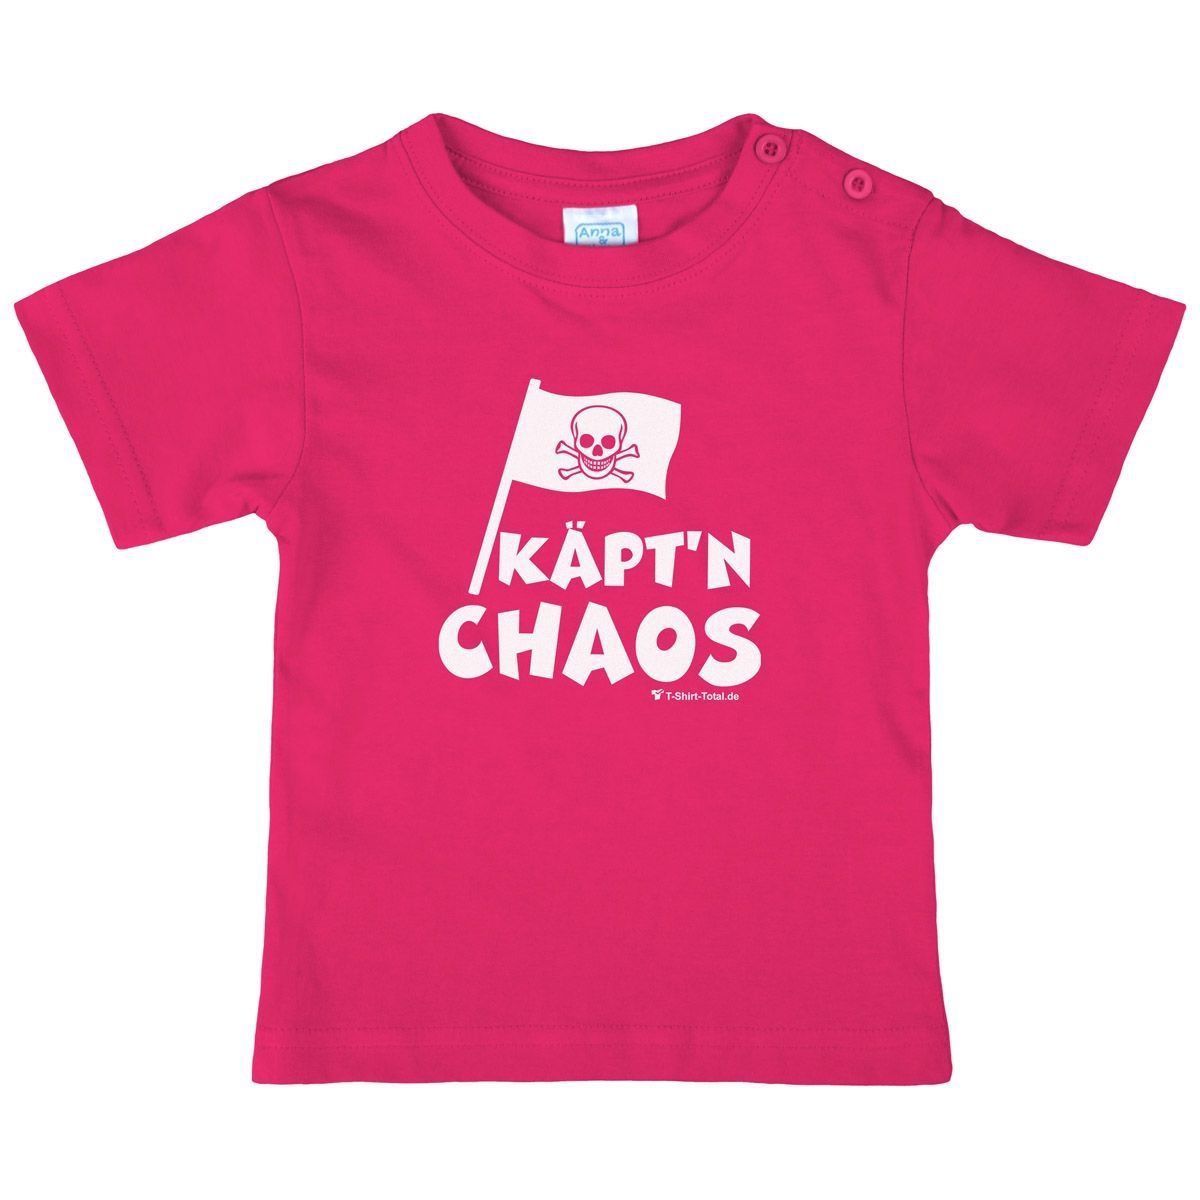 Käptn Chaos Kinder T-Shirt pink 104